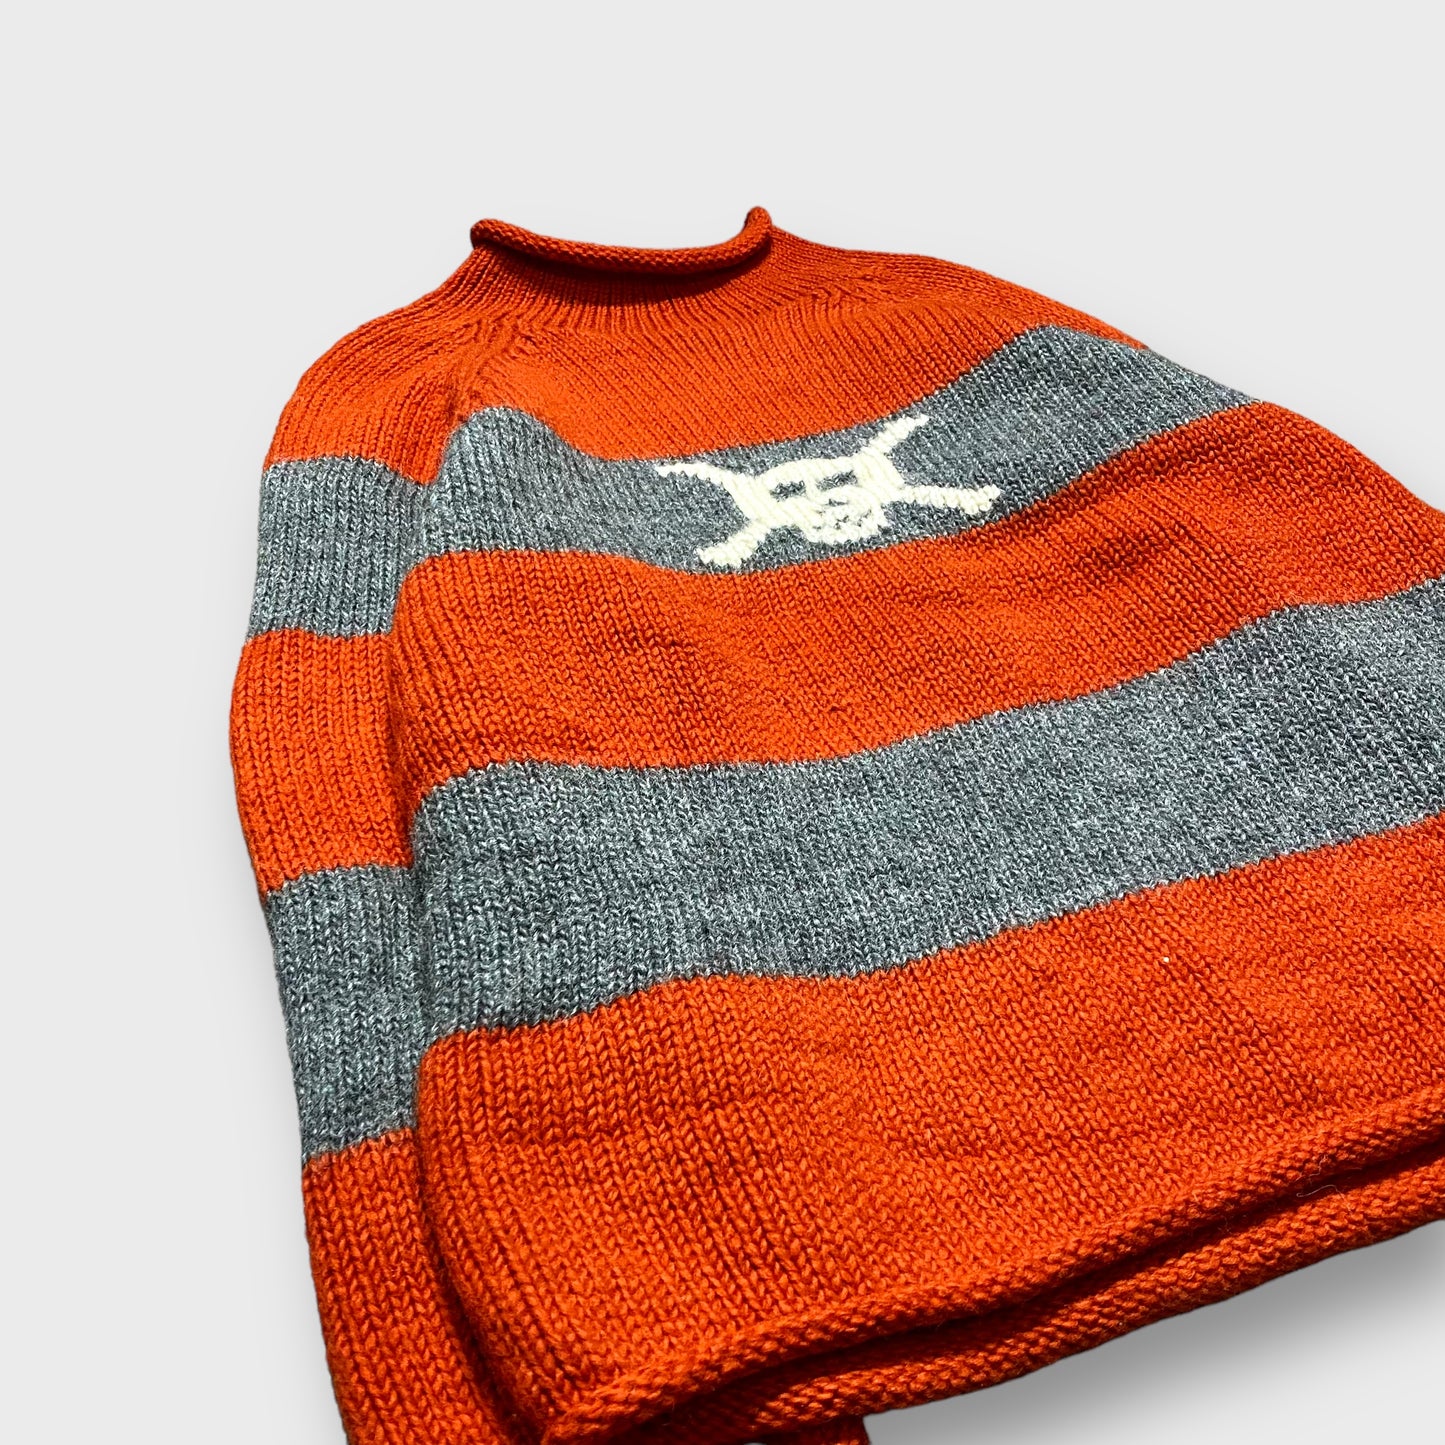 Skull design border knit sweater